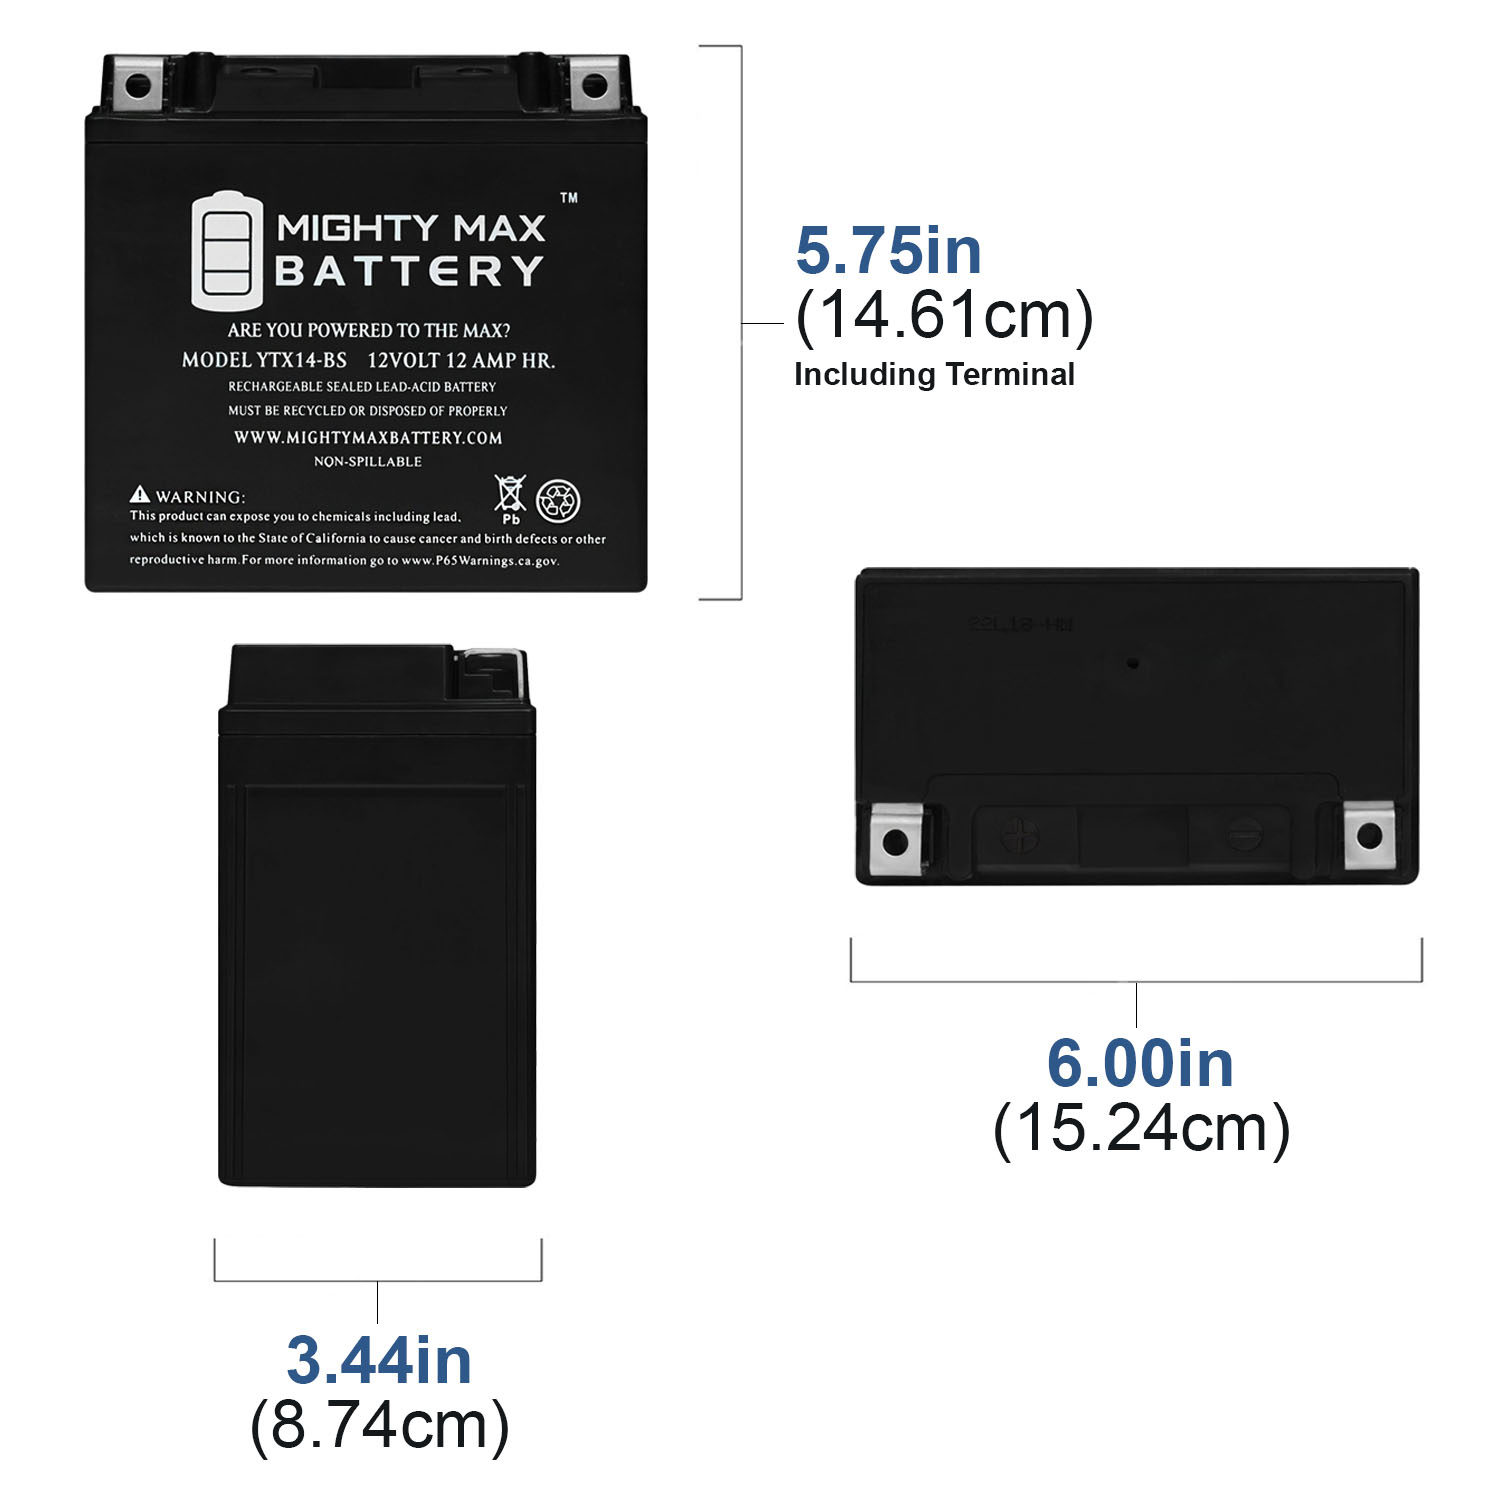 Batería FTX12-BS /M6014 // 12V 10Ah 180A - Verma Baterias